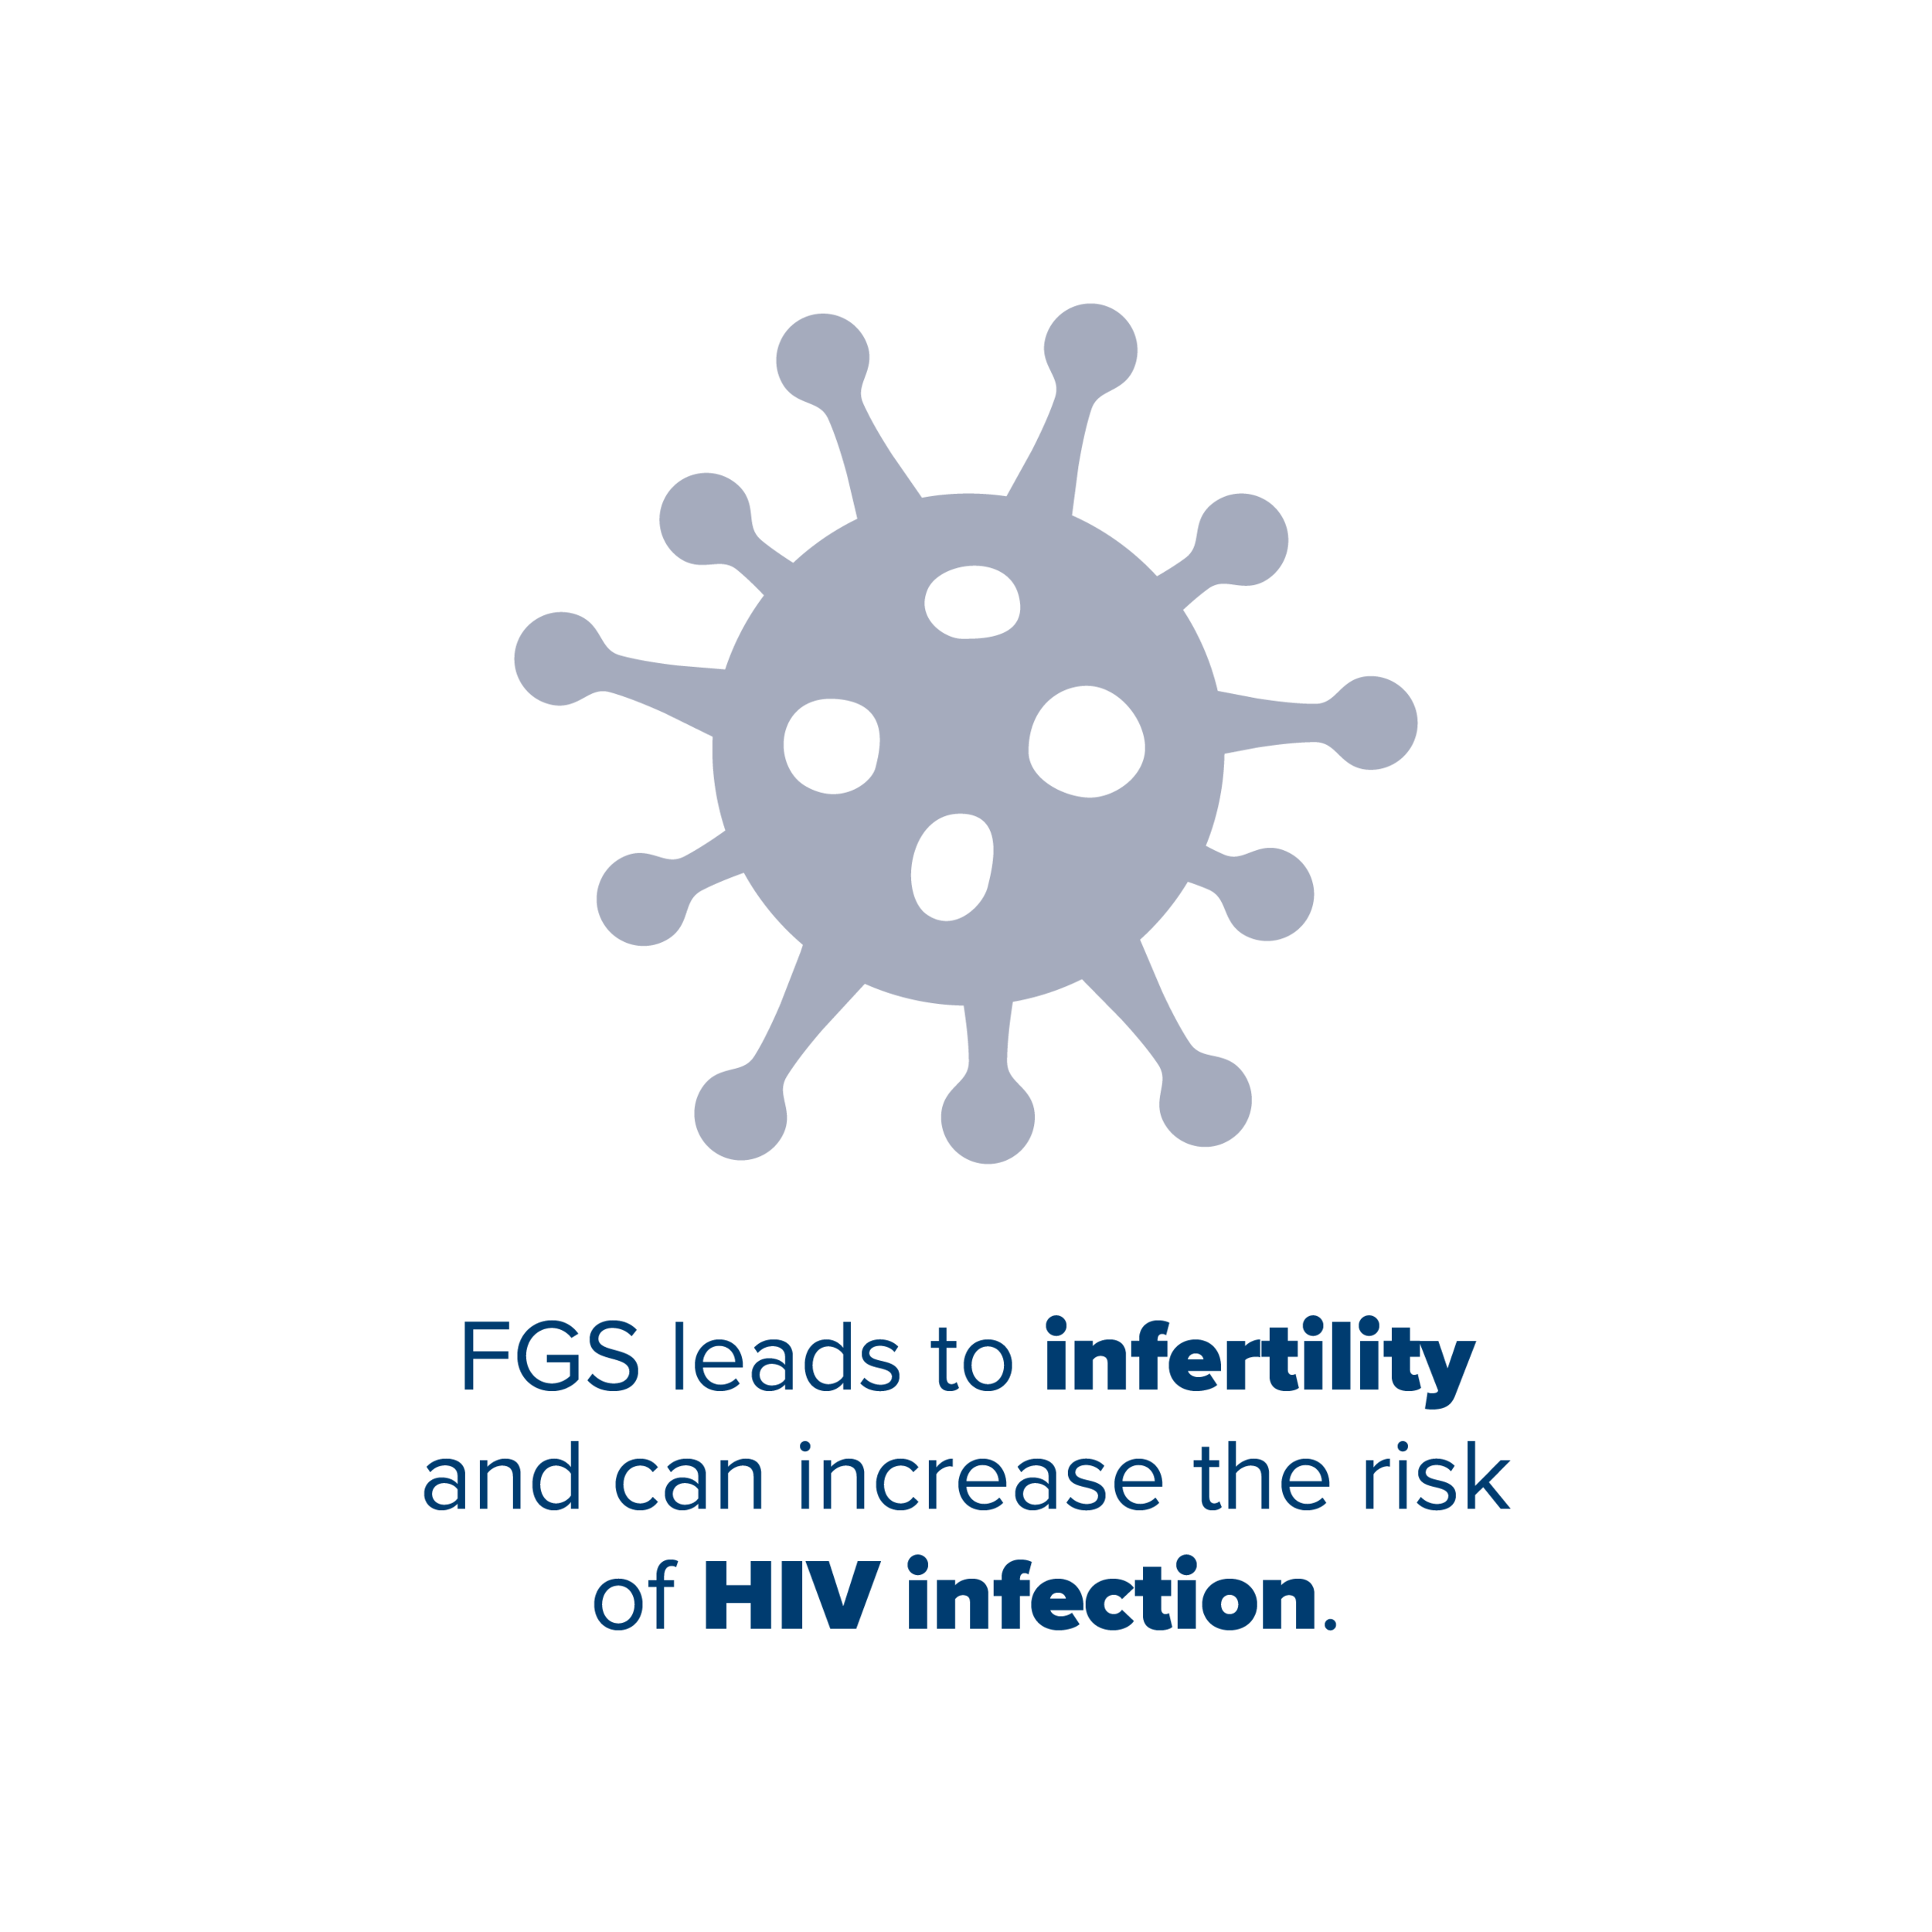  FGS会导致不孕，并会增加感染艾滋病毒的风险 